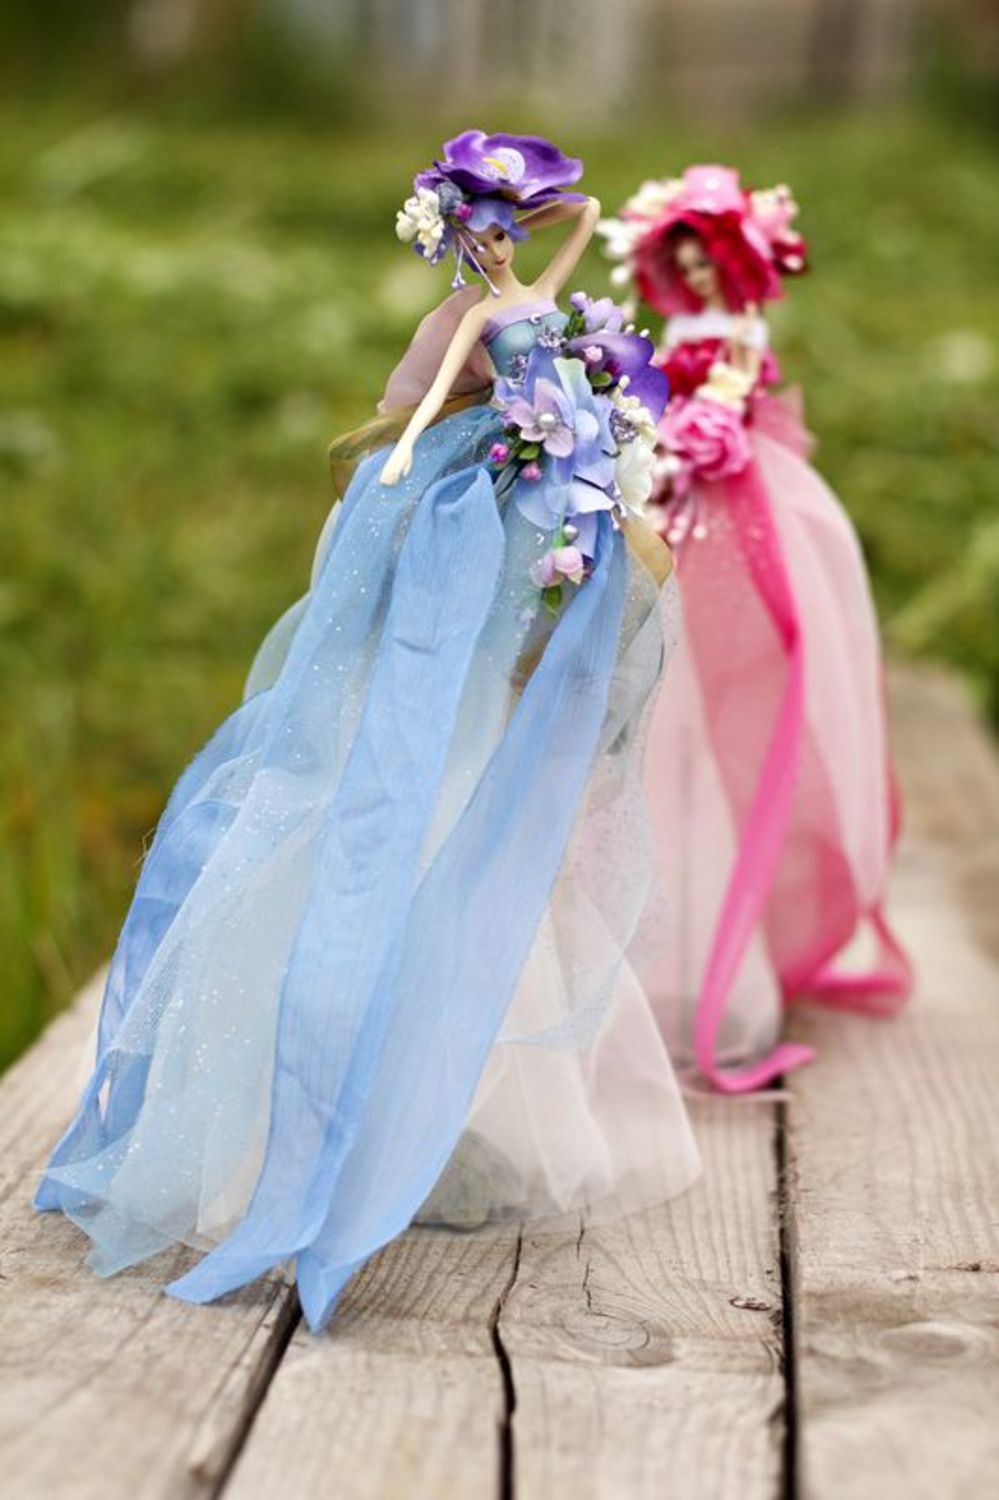 Poupée faite main pour mariage en robe bleue photo 5